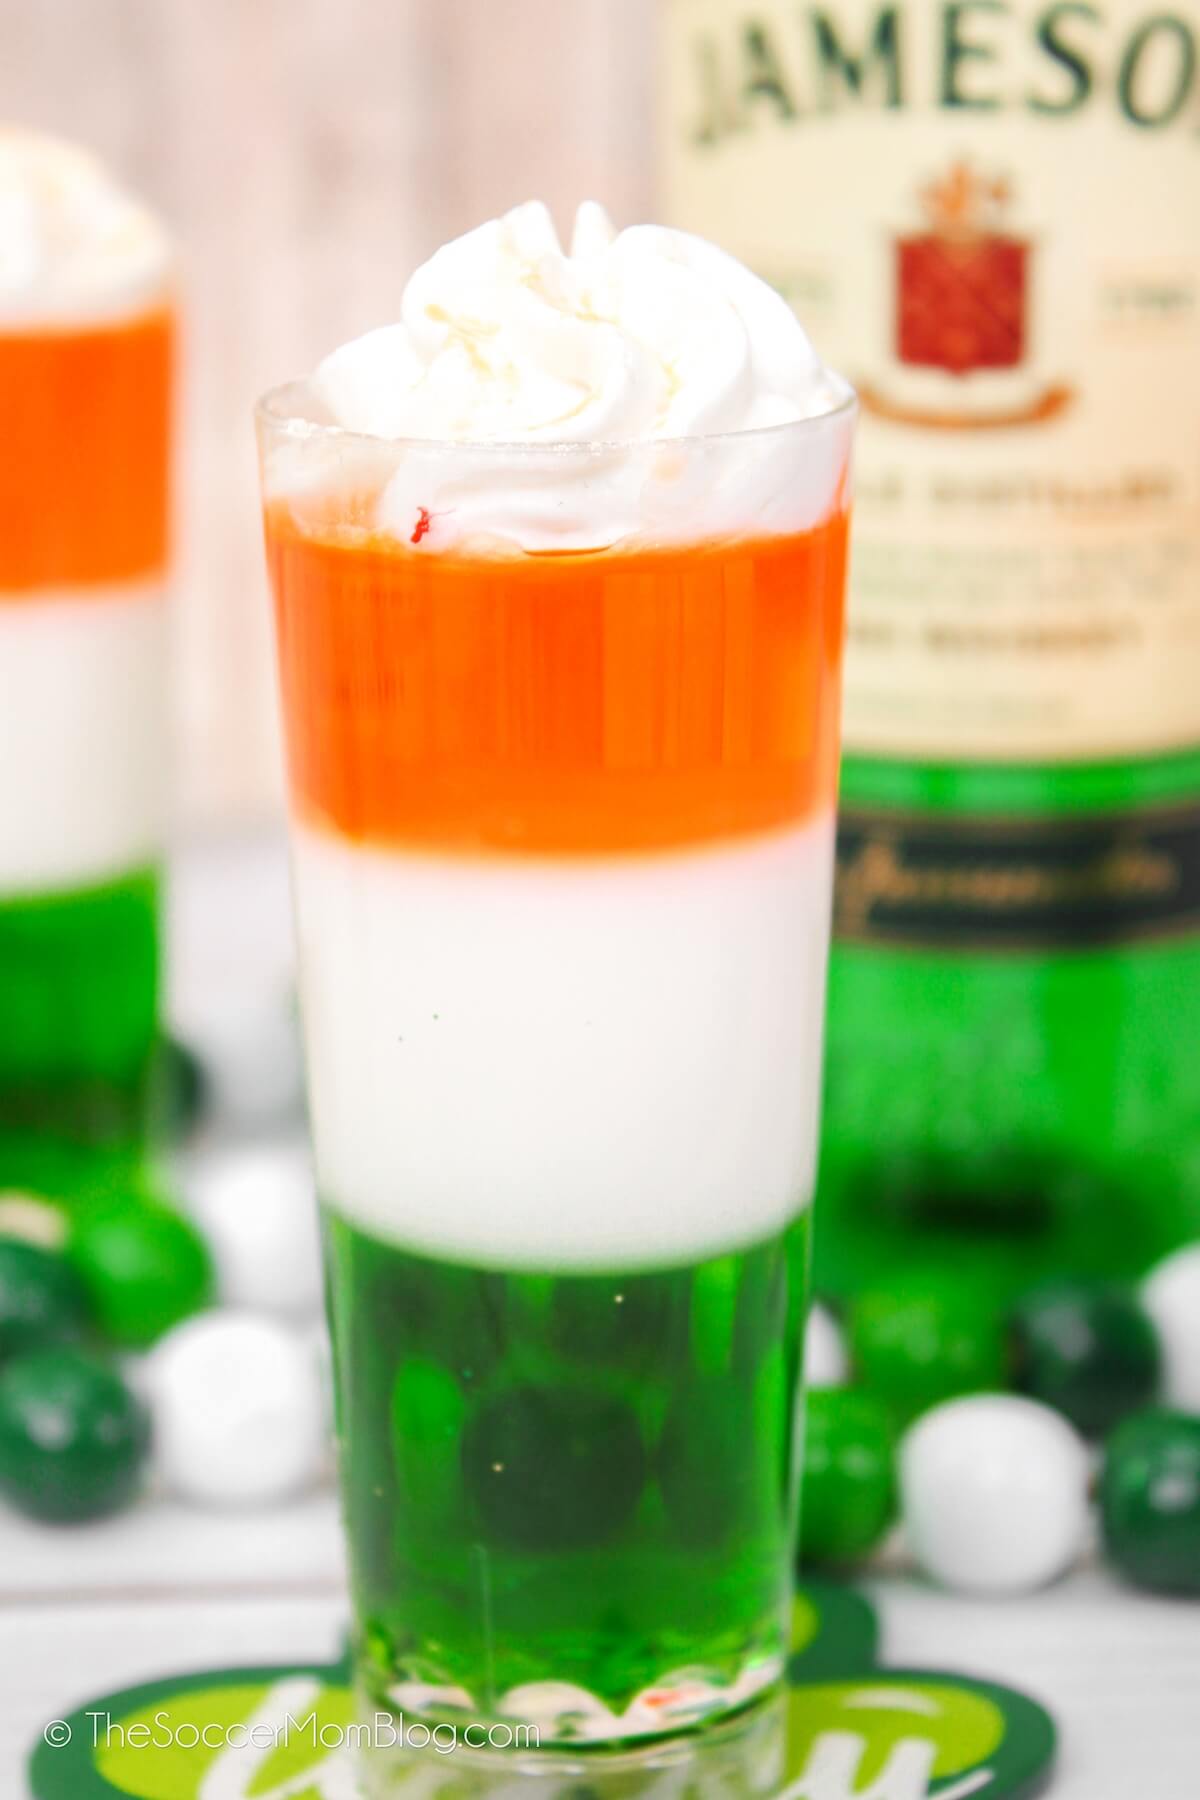 close up of a layered orange, white, and green jello shot